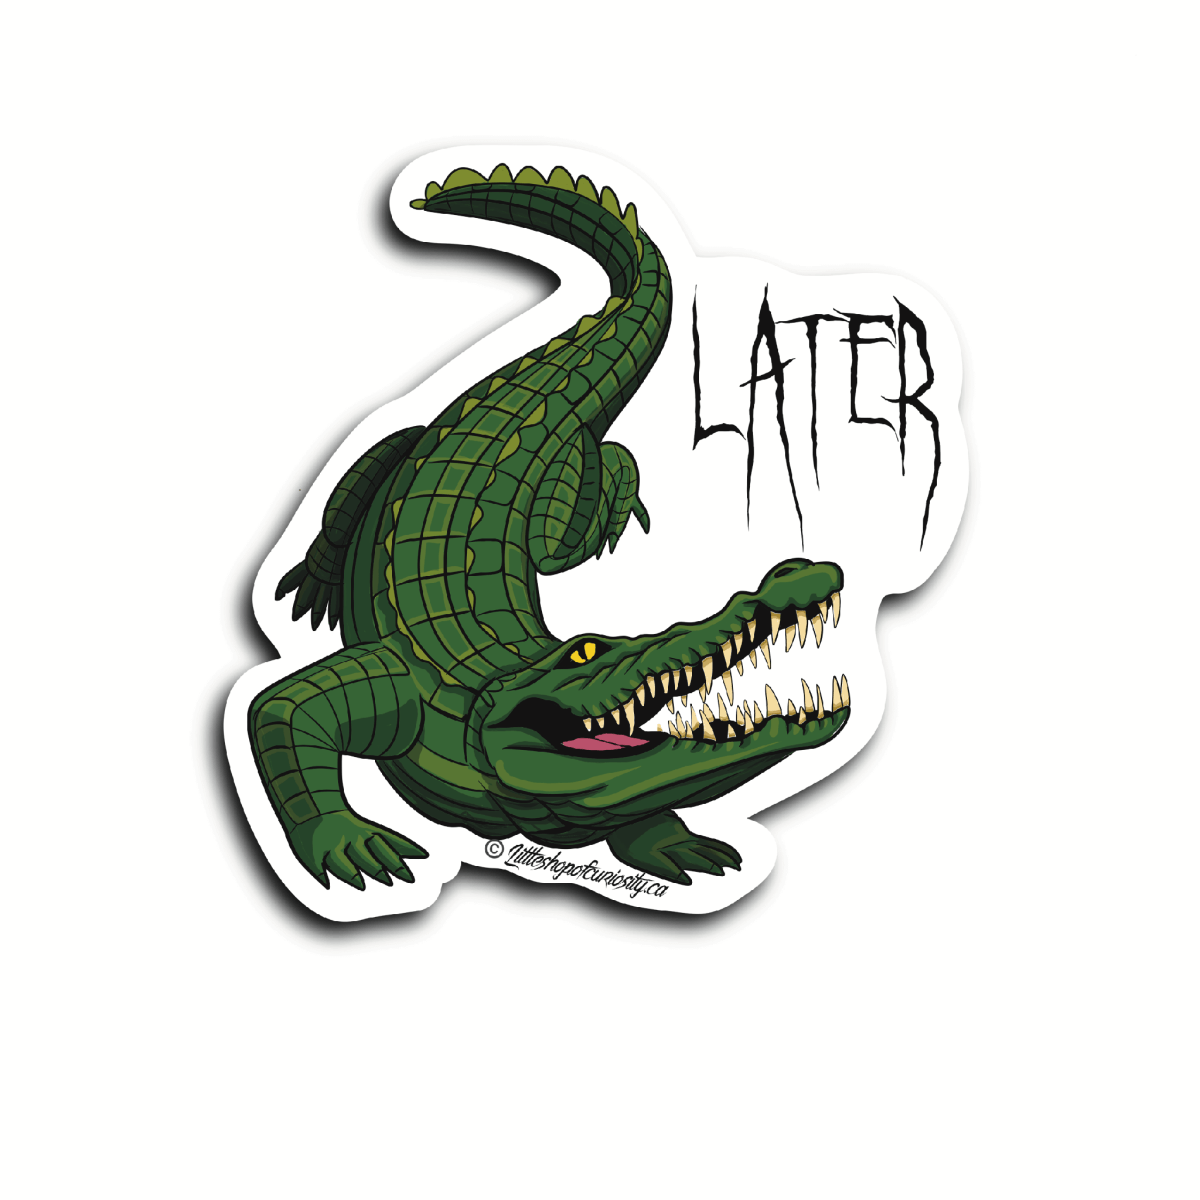 Later Gator Sticker - Colour Sticker - Little Shop of Curiosity